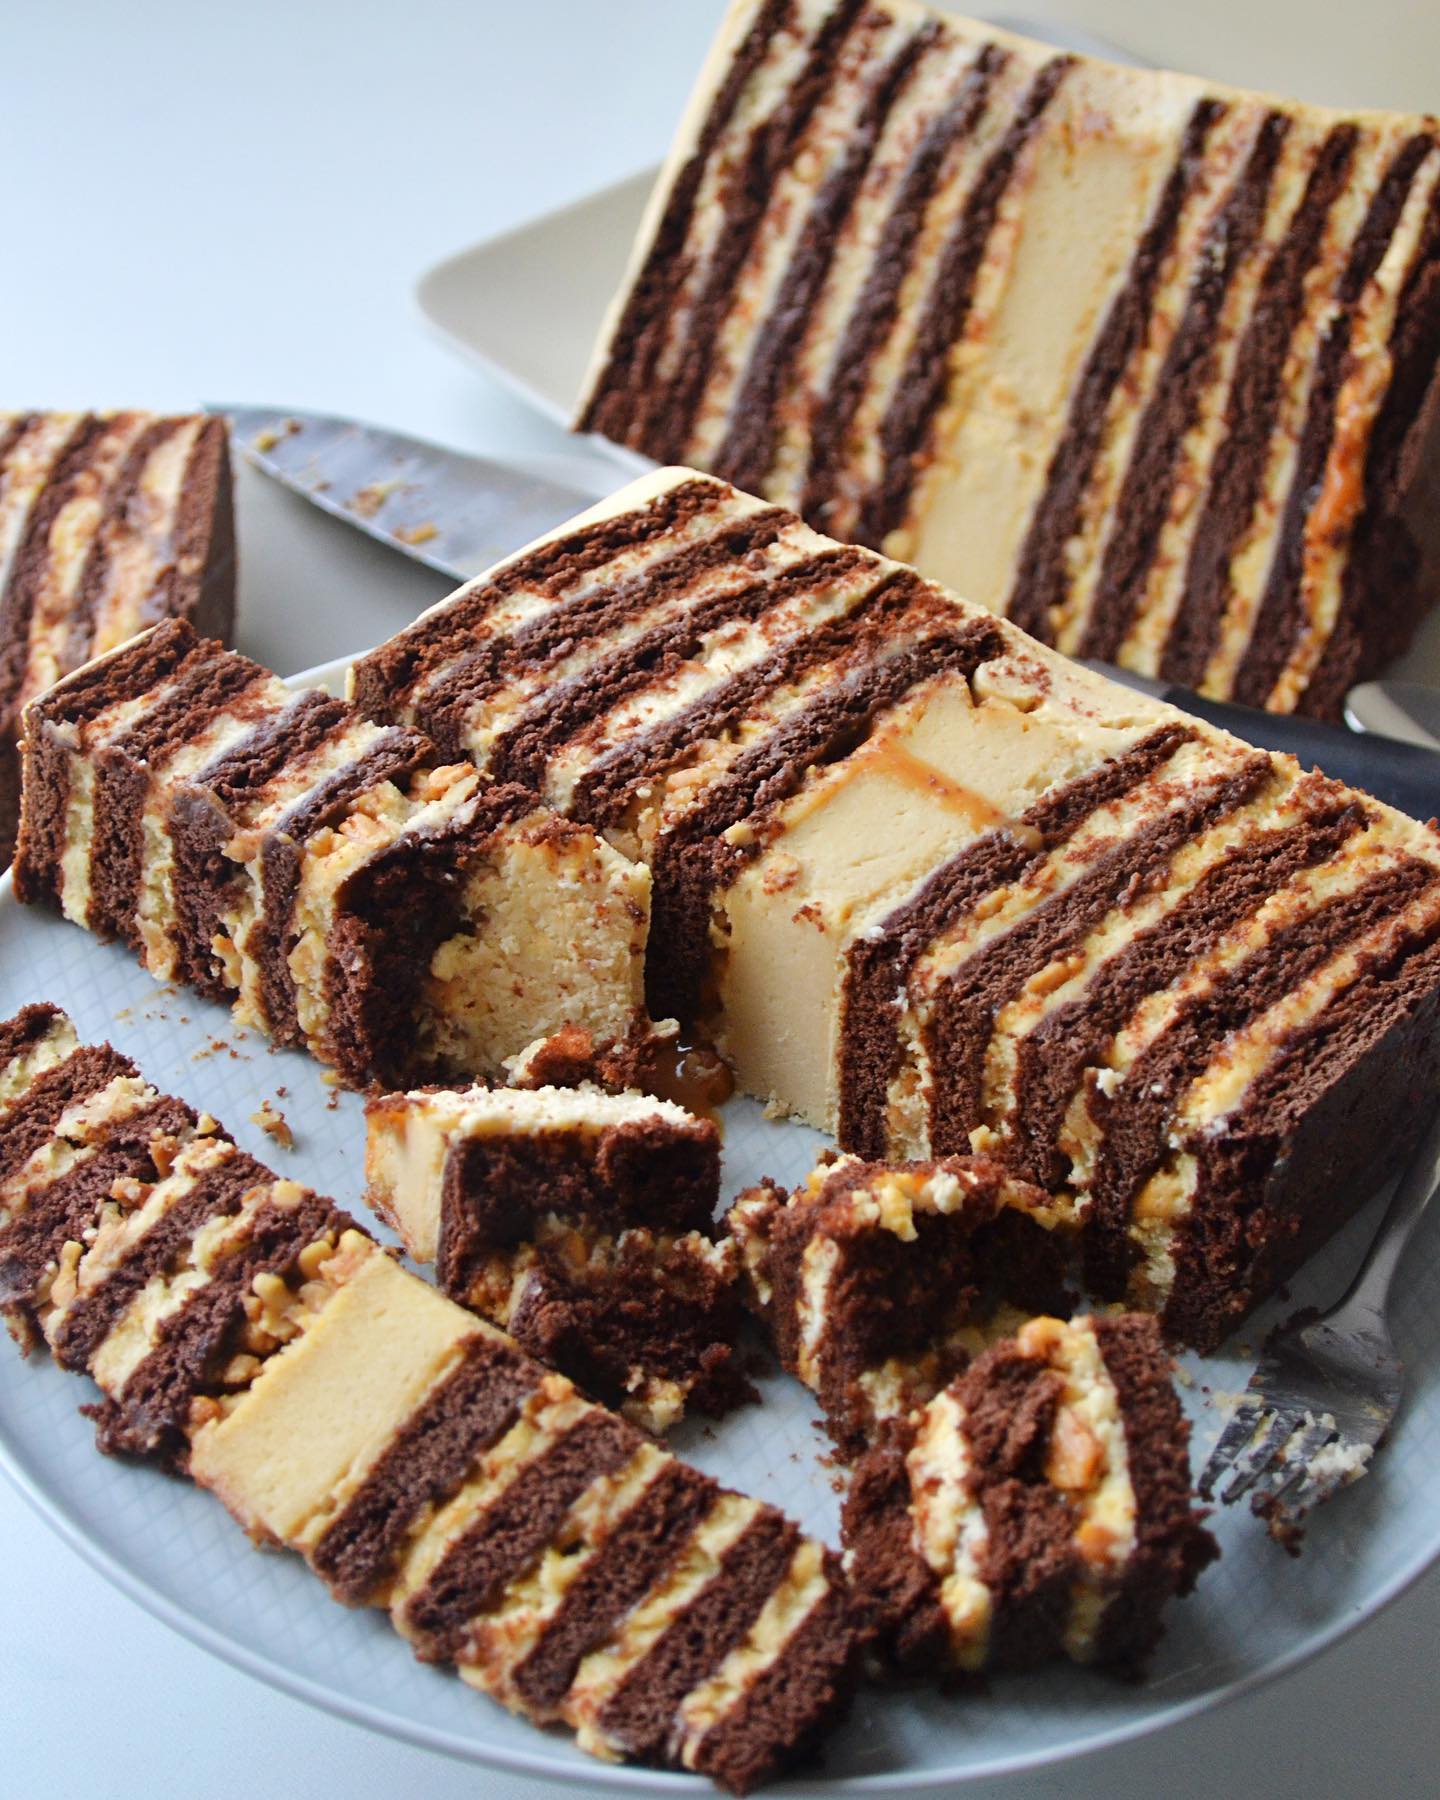 Chocolate & caramel honey cake with Baileys cheesecake